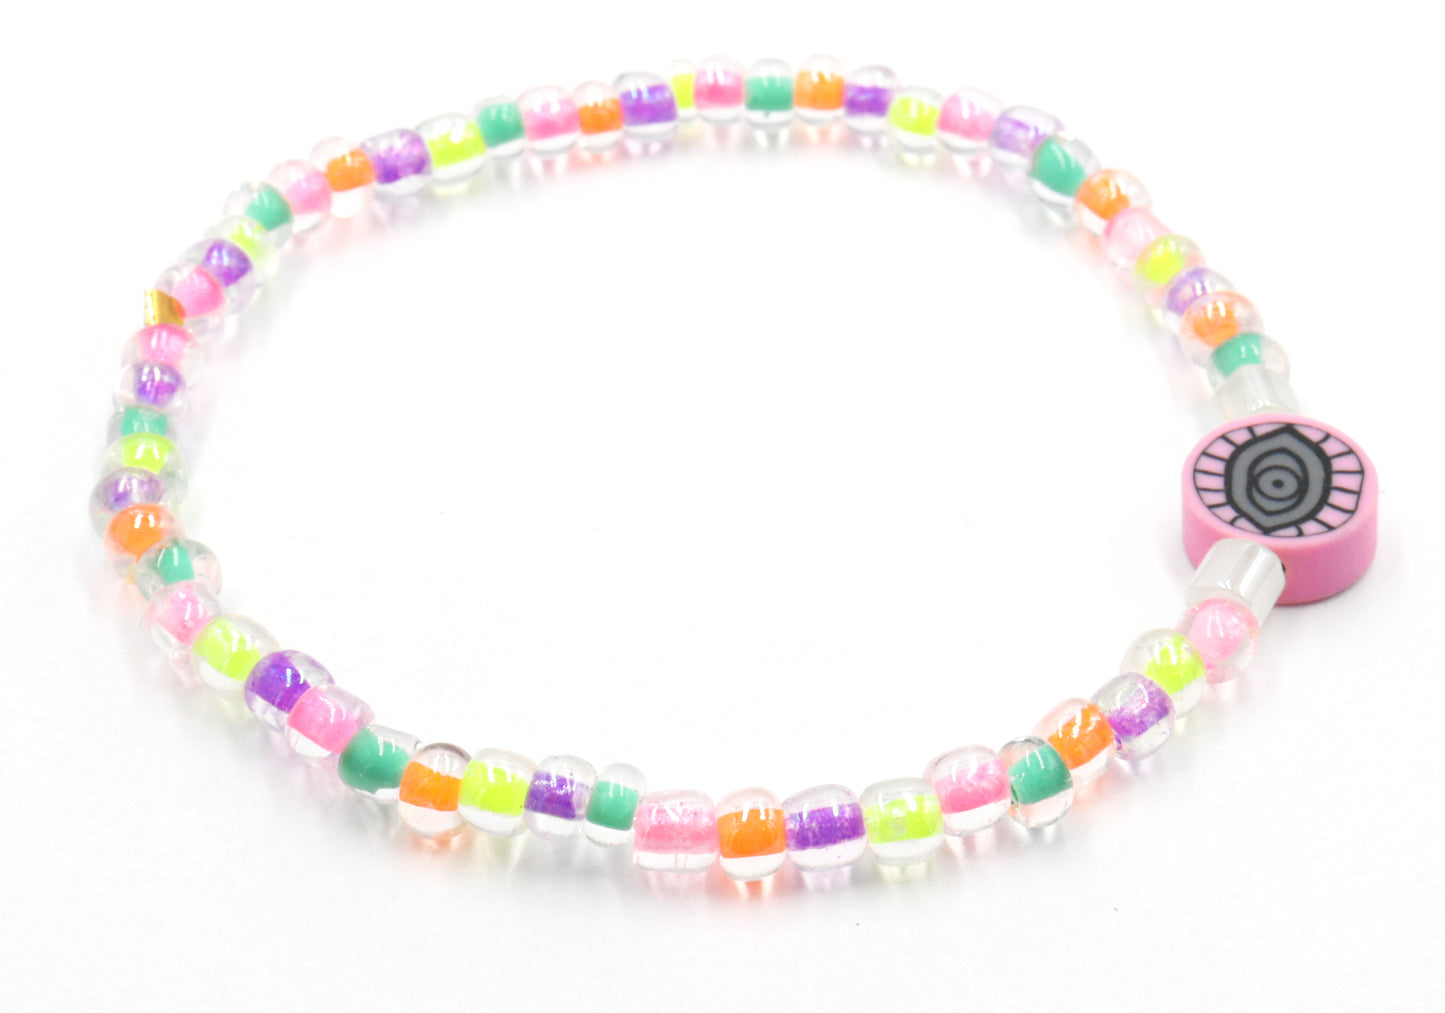 The Best Case of Pink Eye - Trippy Pastel Glass and Polymer Charm Bracelet by Monkeys Mojo